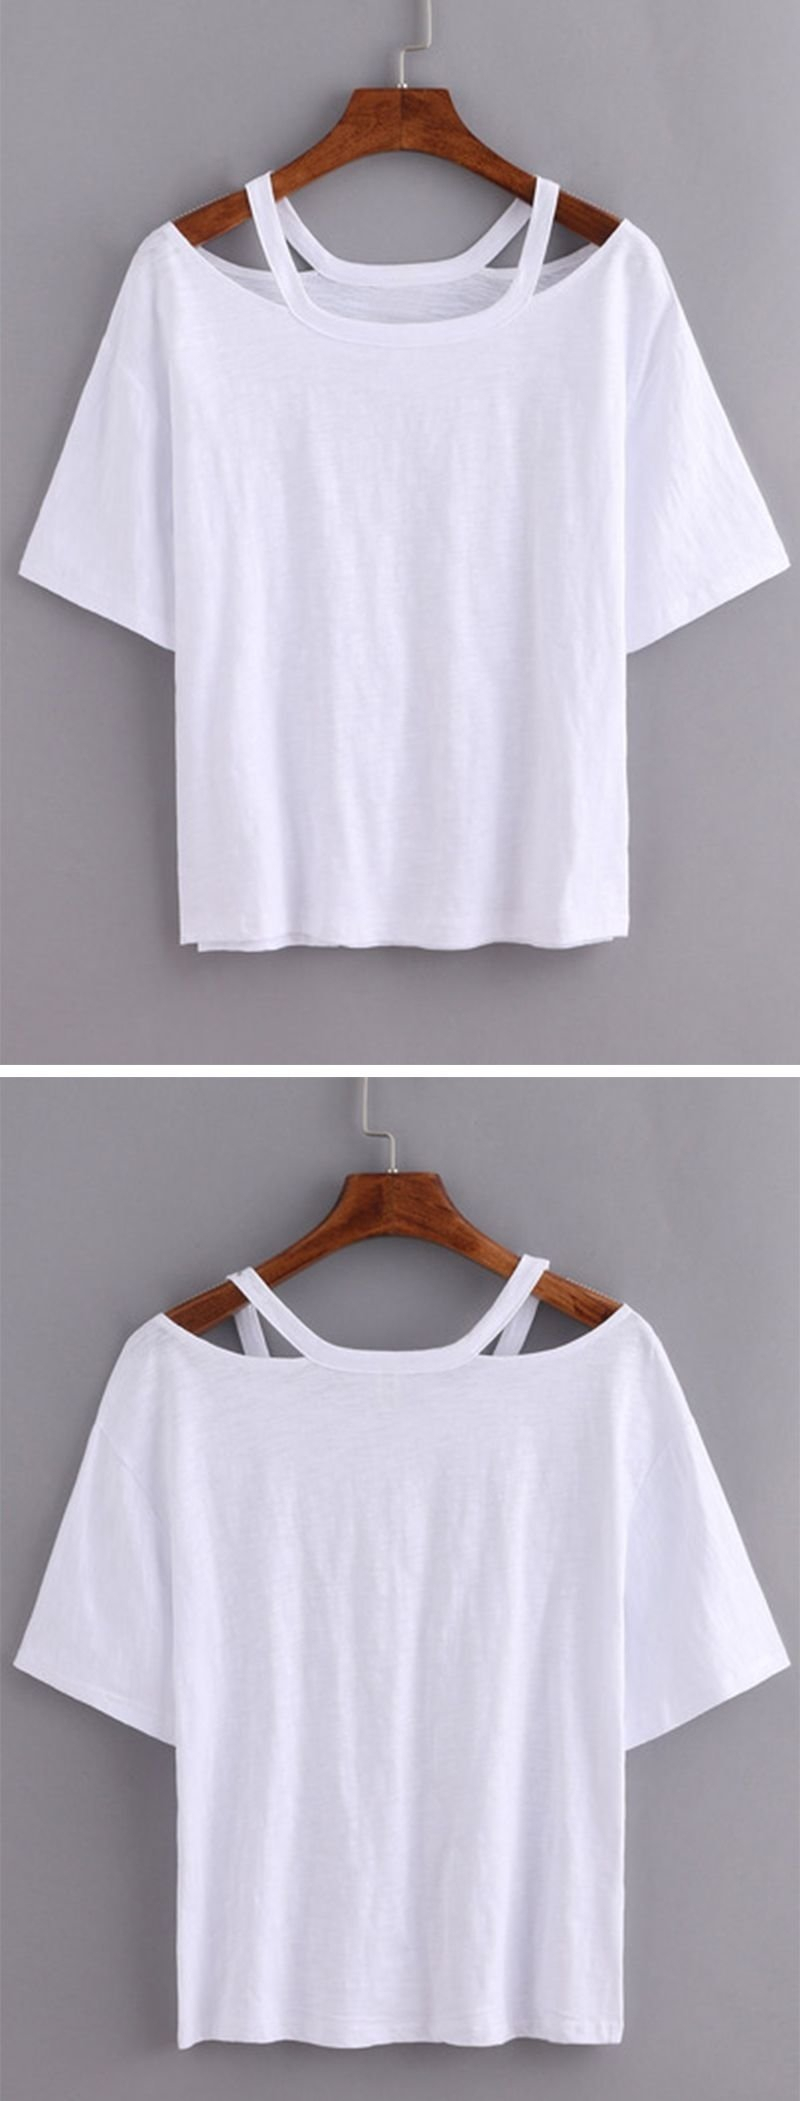 10 Spectacular Ideas For T Shirts Cutting band t shirt cutting ideas 2024